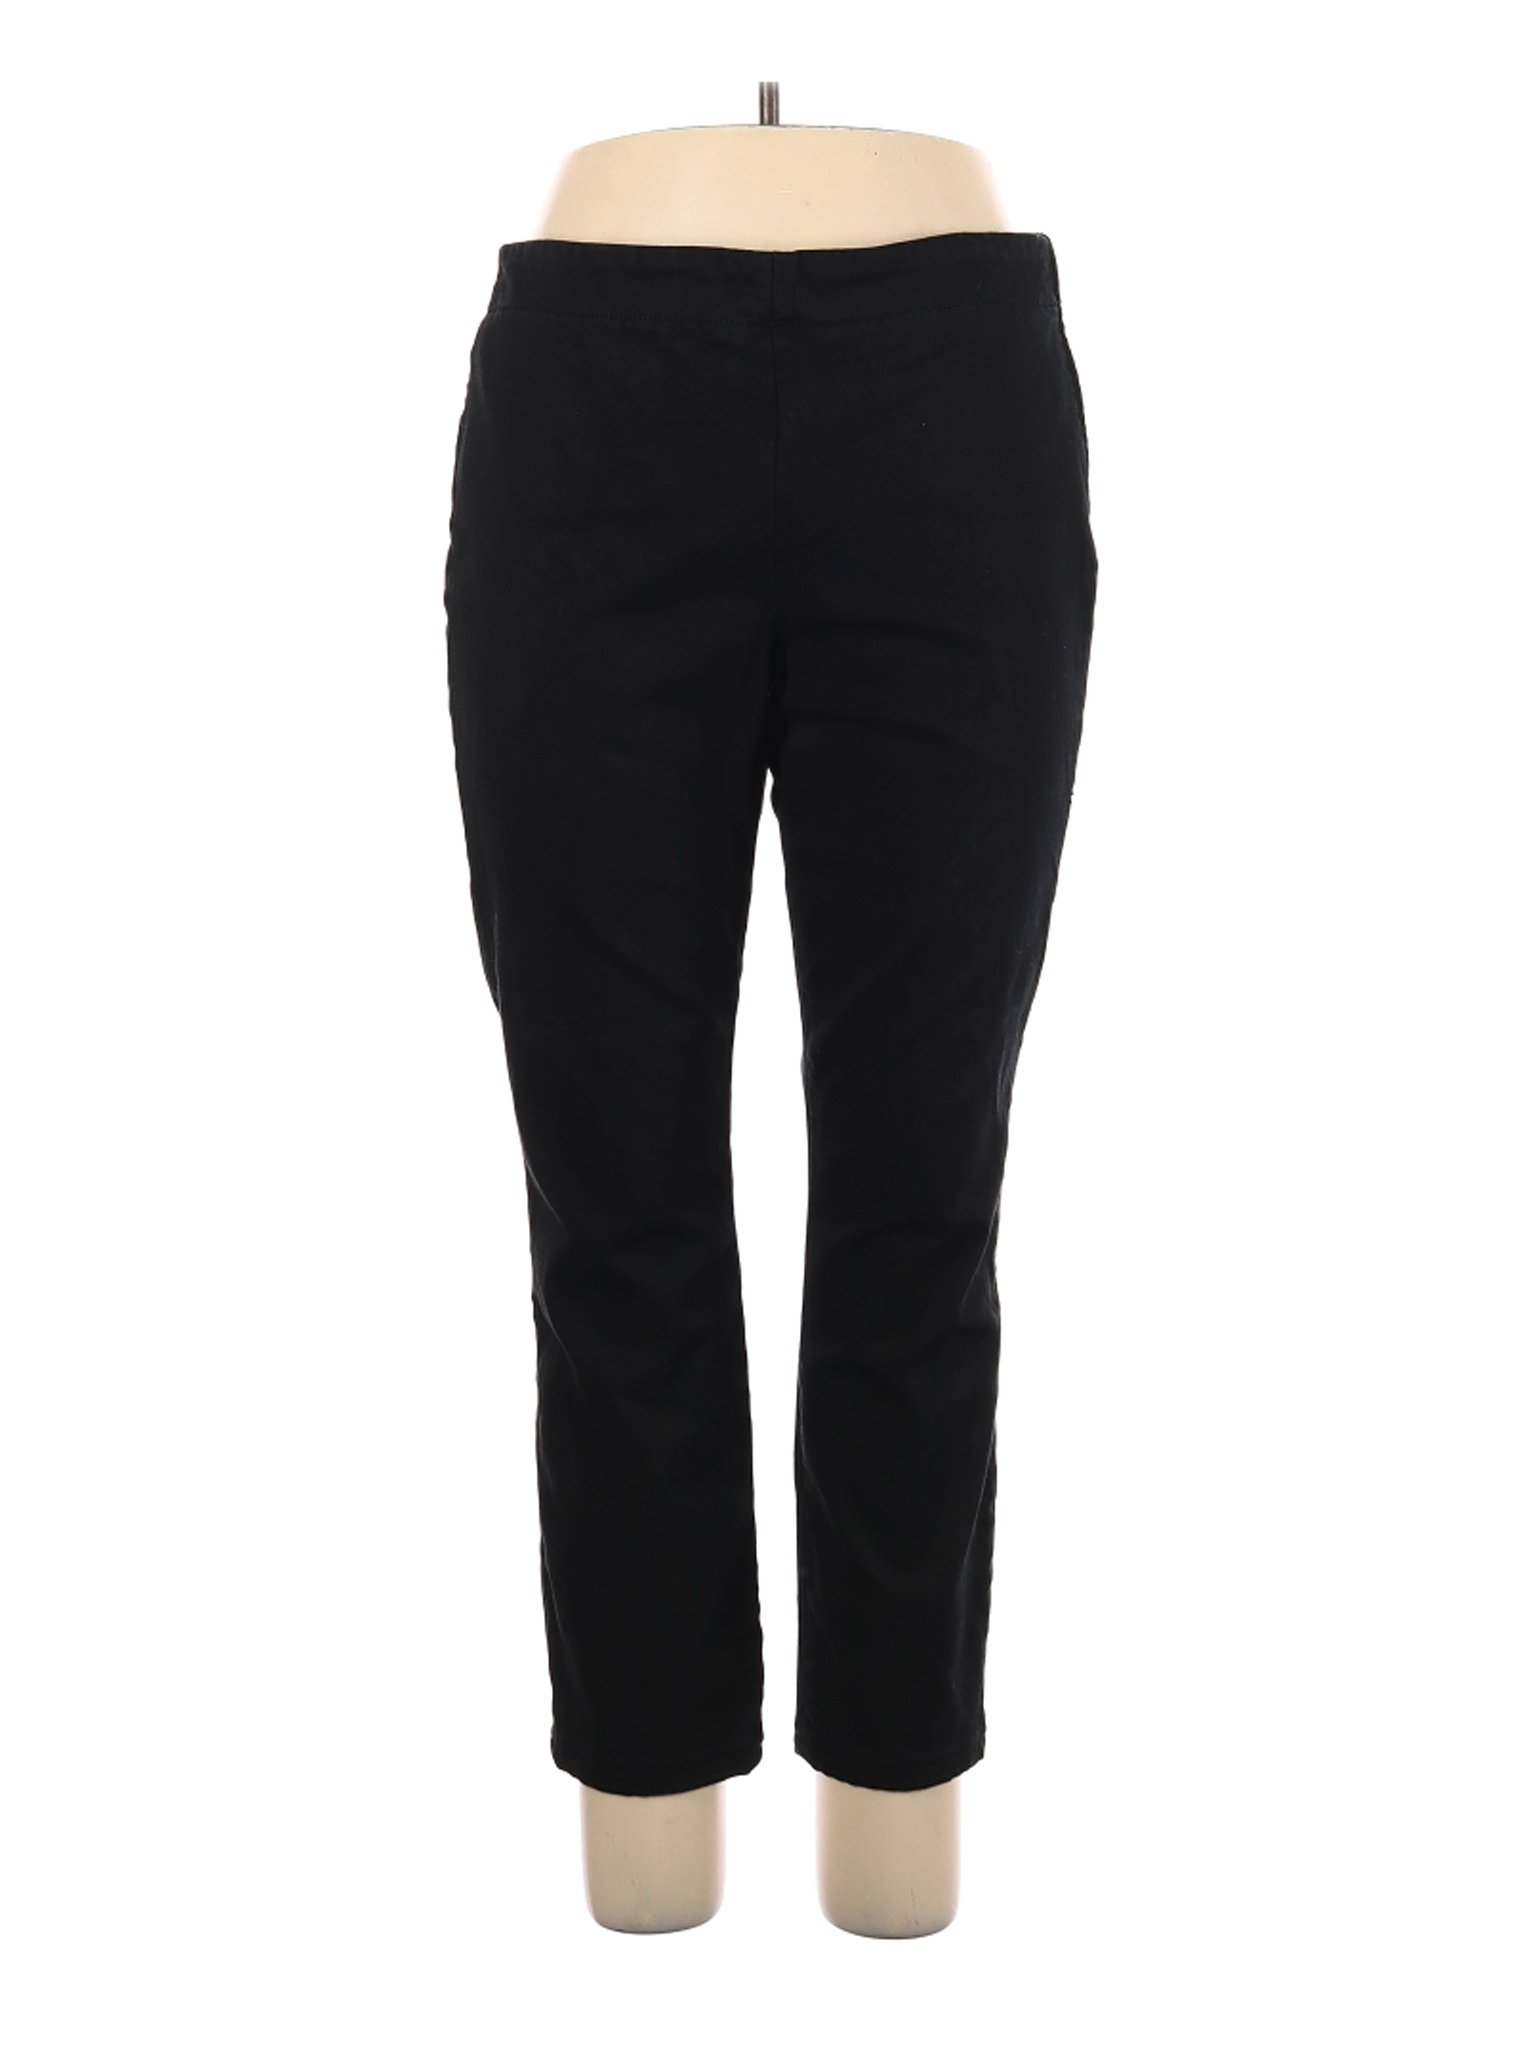 Talbots Women Black Casual Pants 14 | eBay